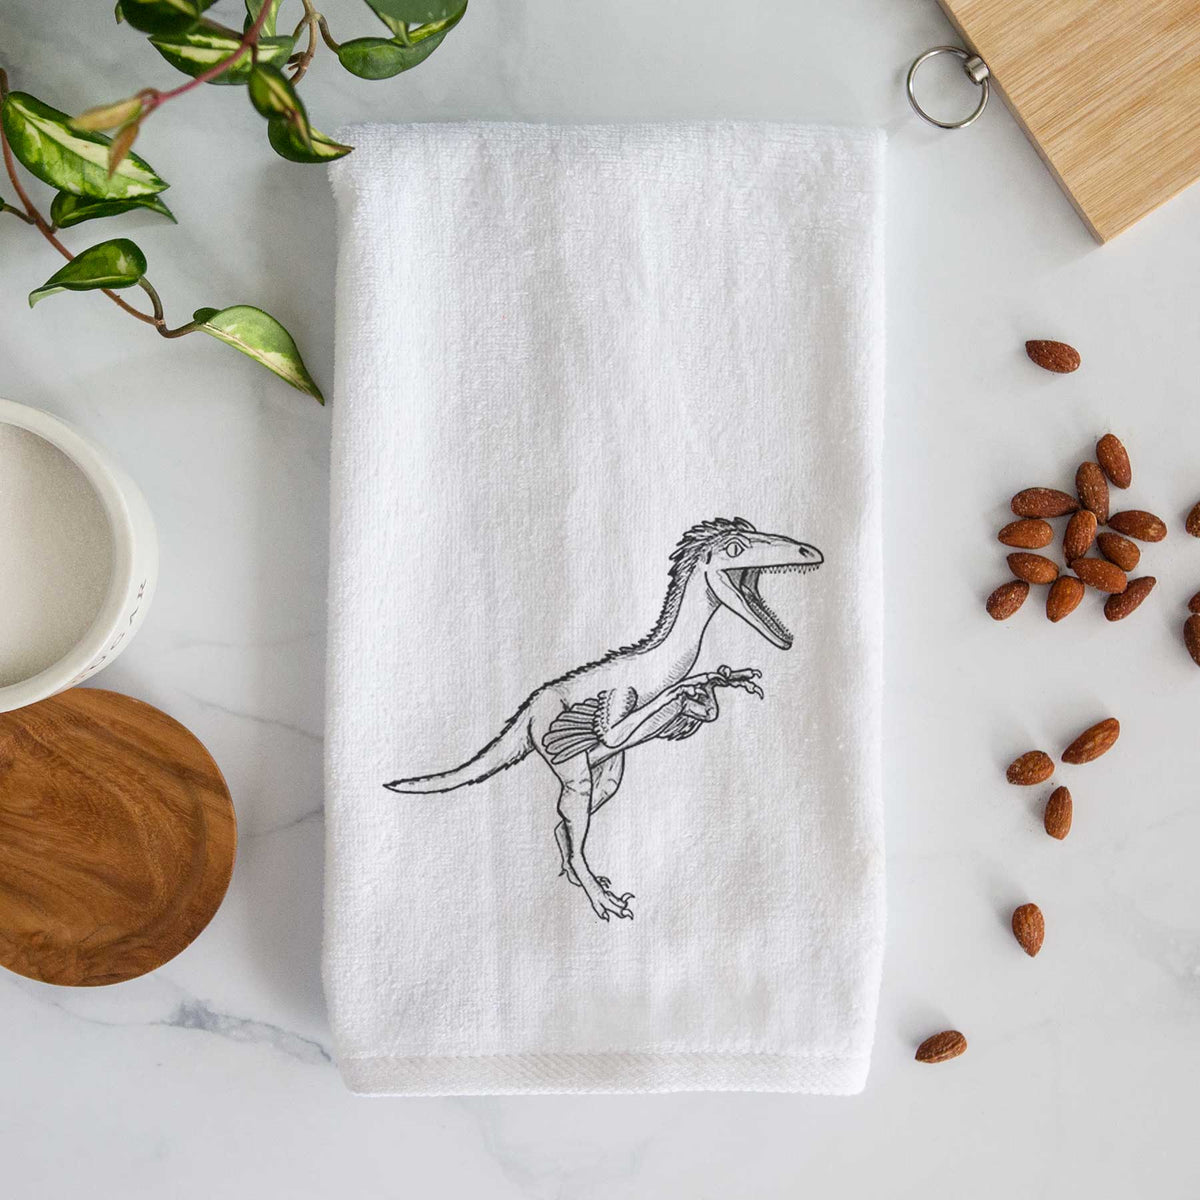 Troodon Formosus Hand Towel